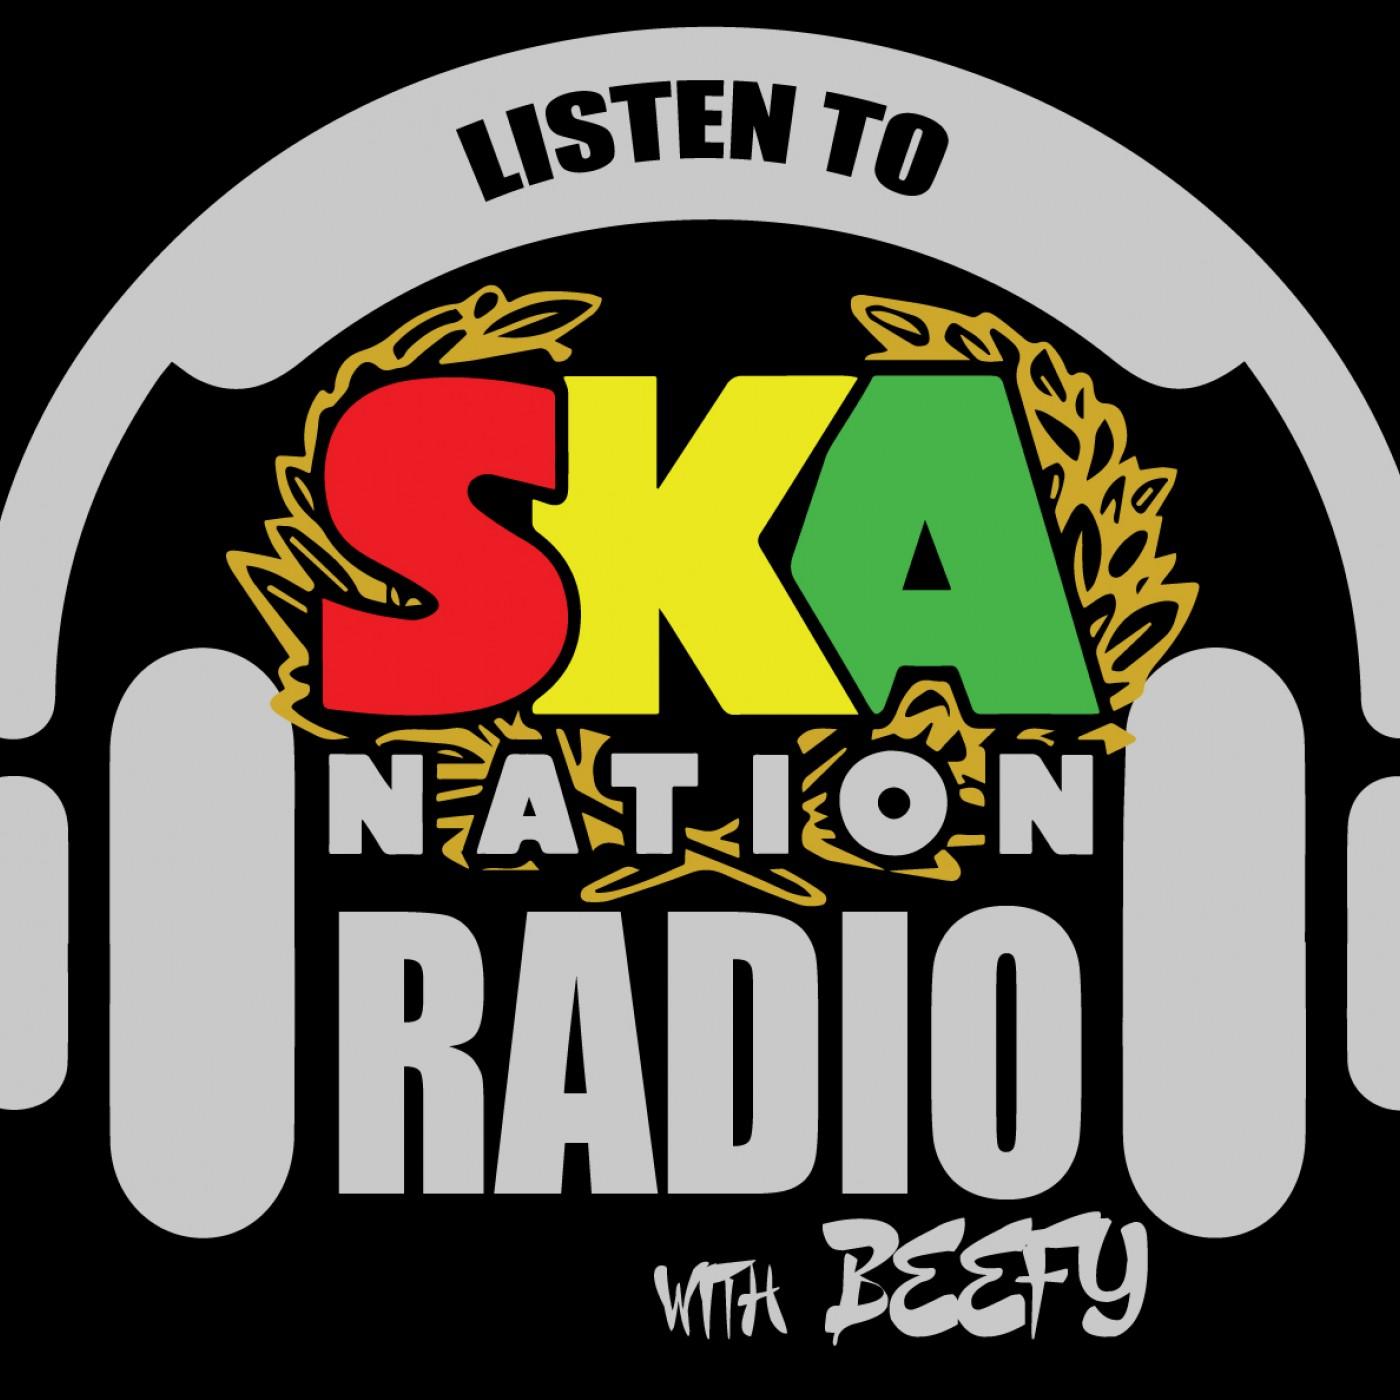 Ska Radio |